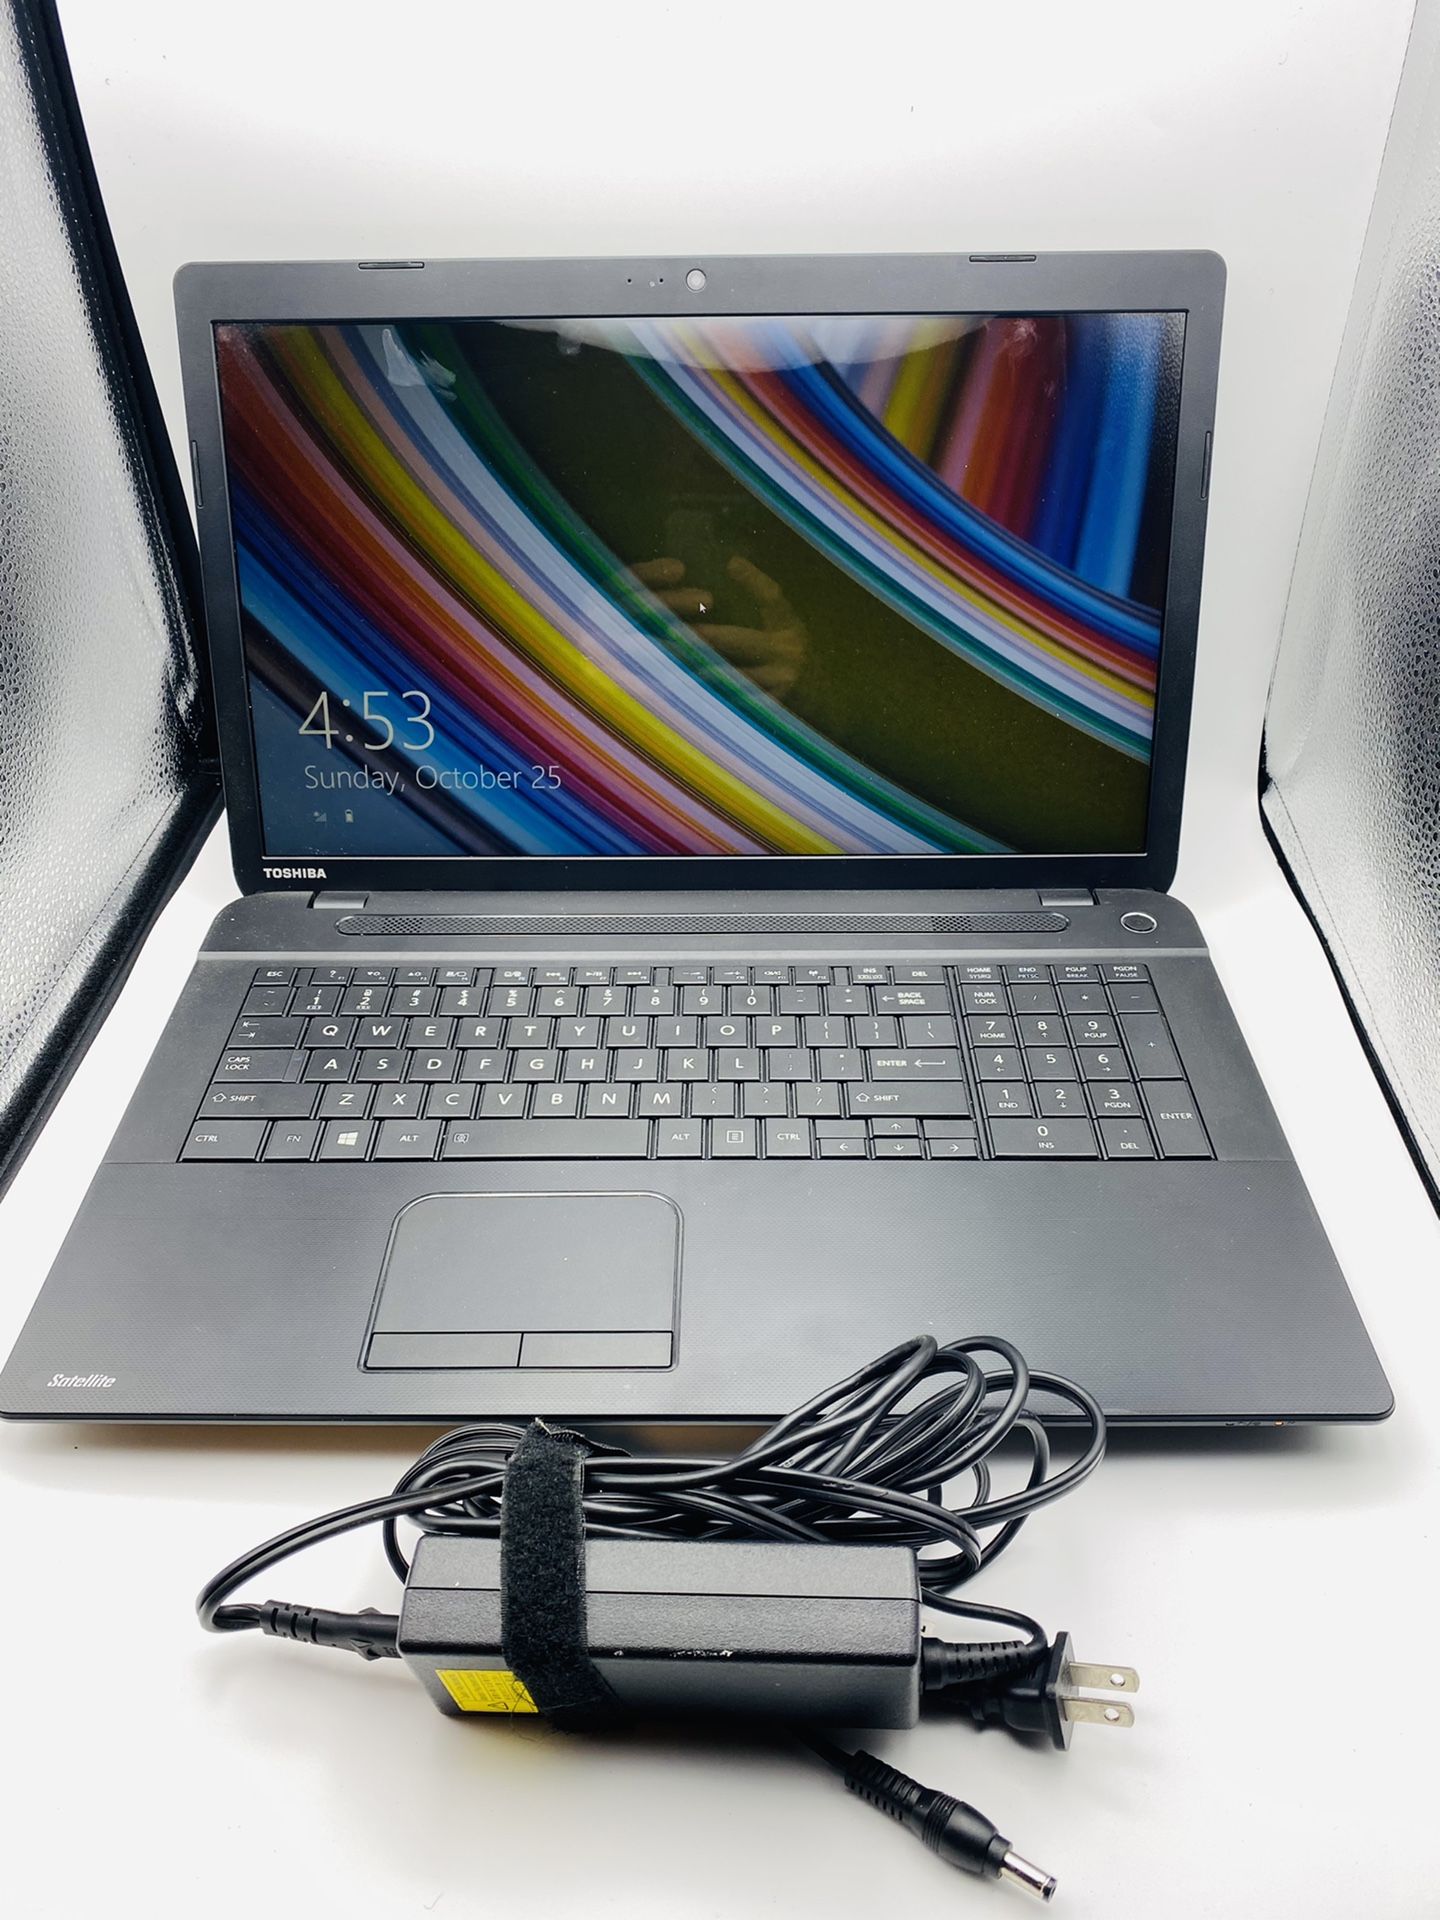 Toshiba Satellite C75D-B7100 AMD A8 2 GHZ 6GB RAM 500 HD 17” Laptop Windows 8.1